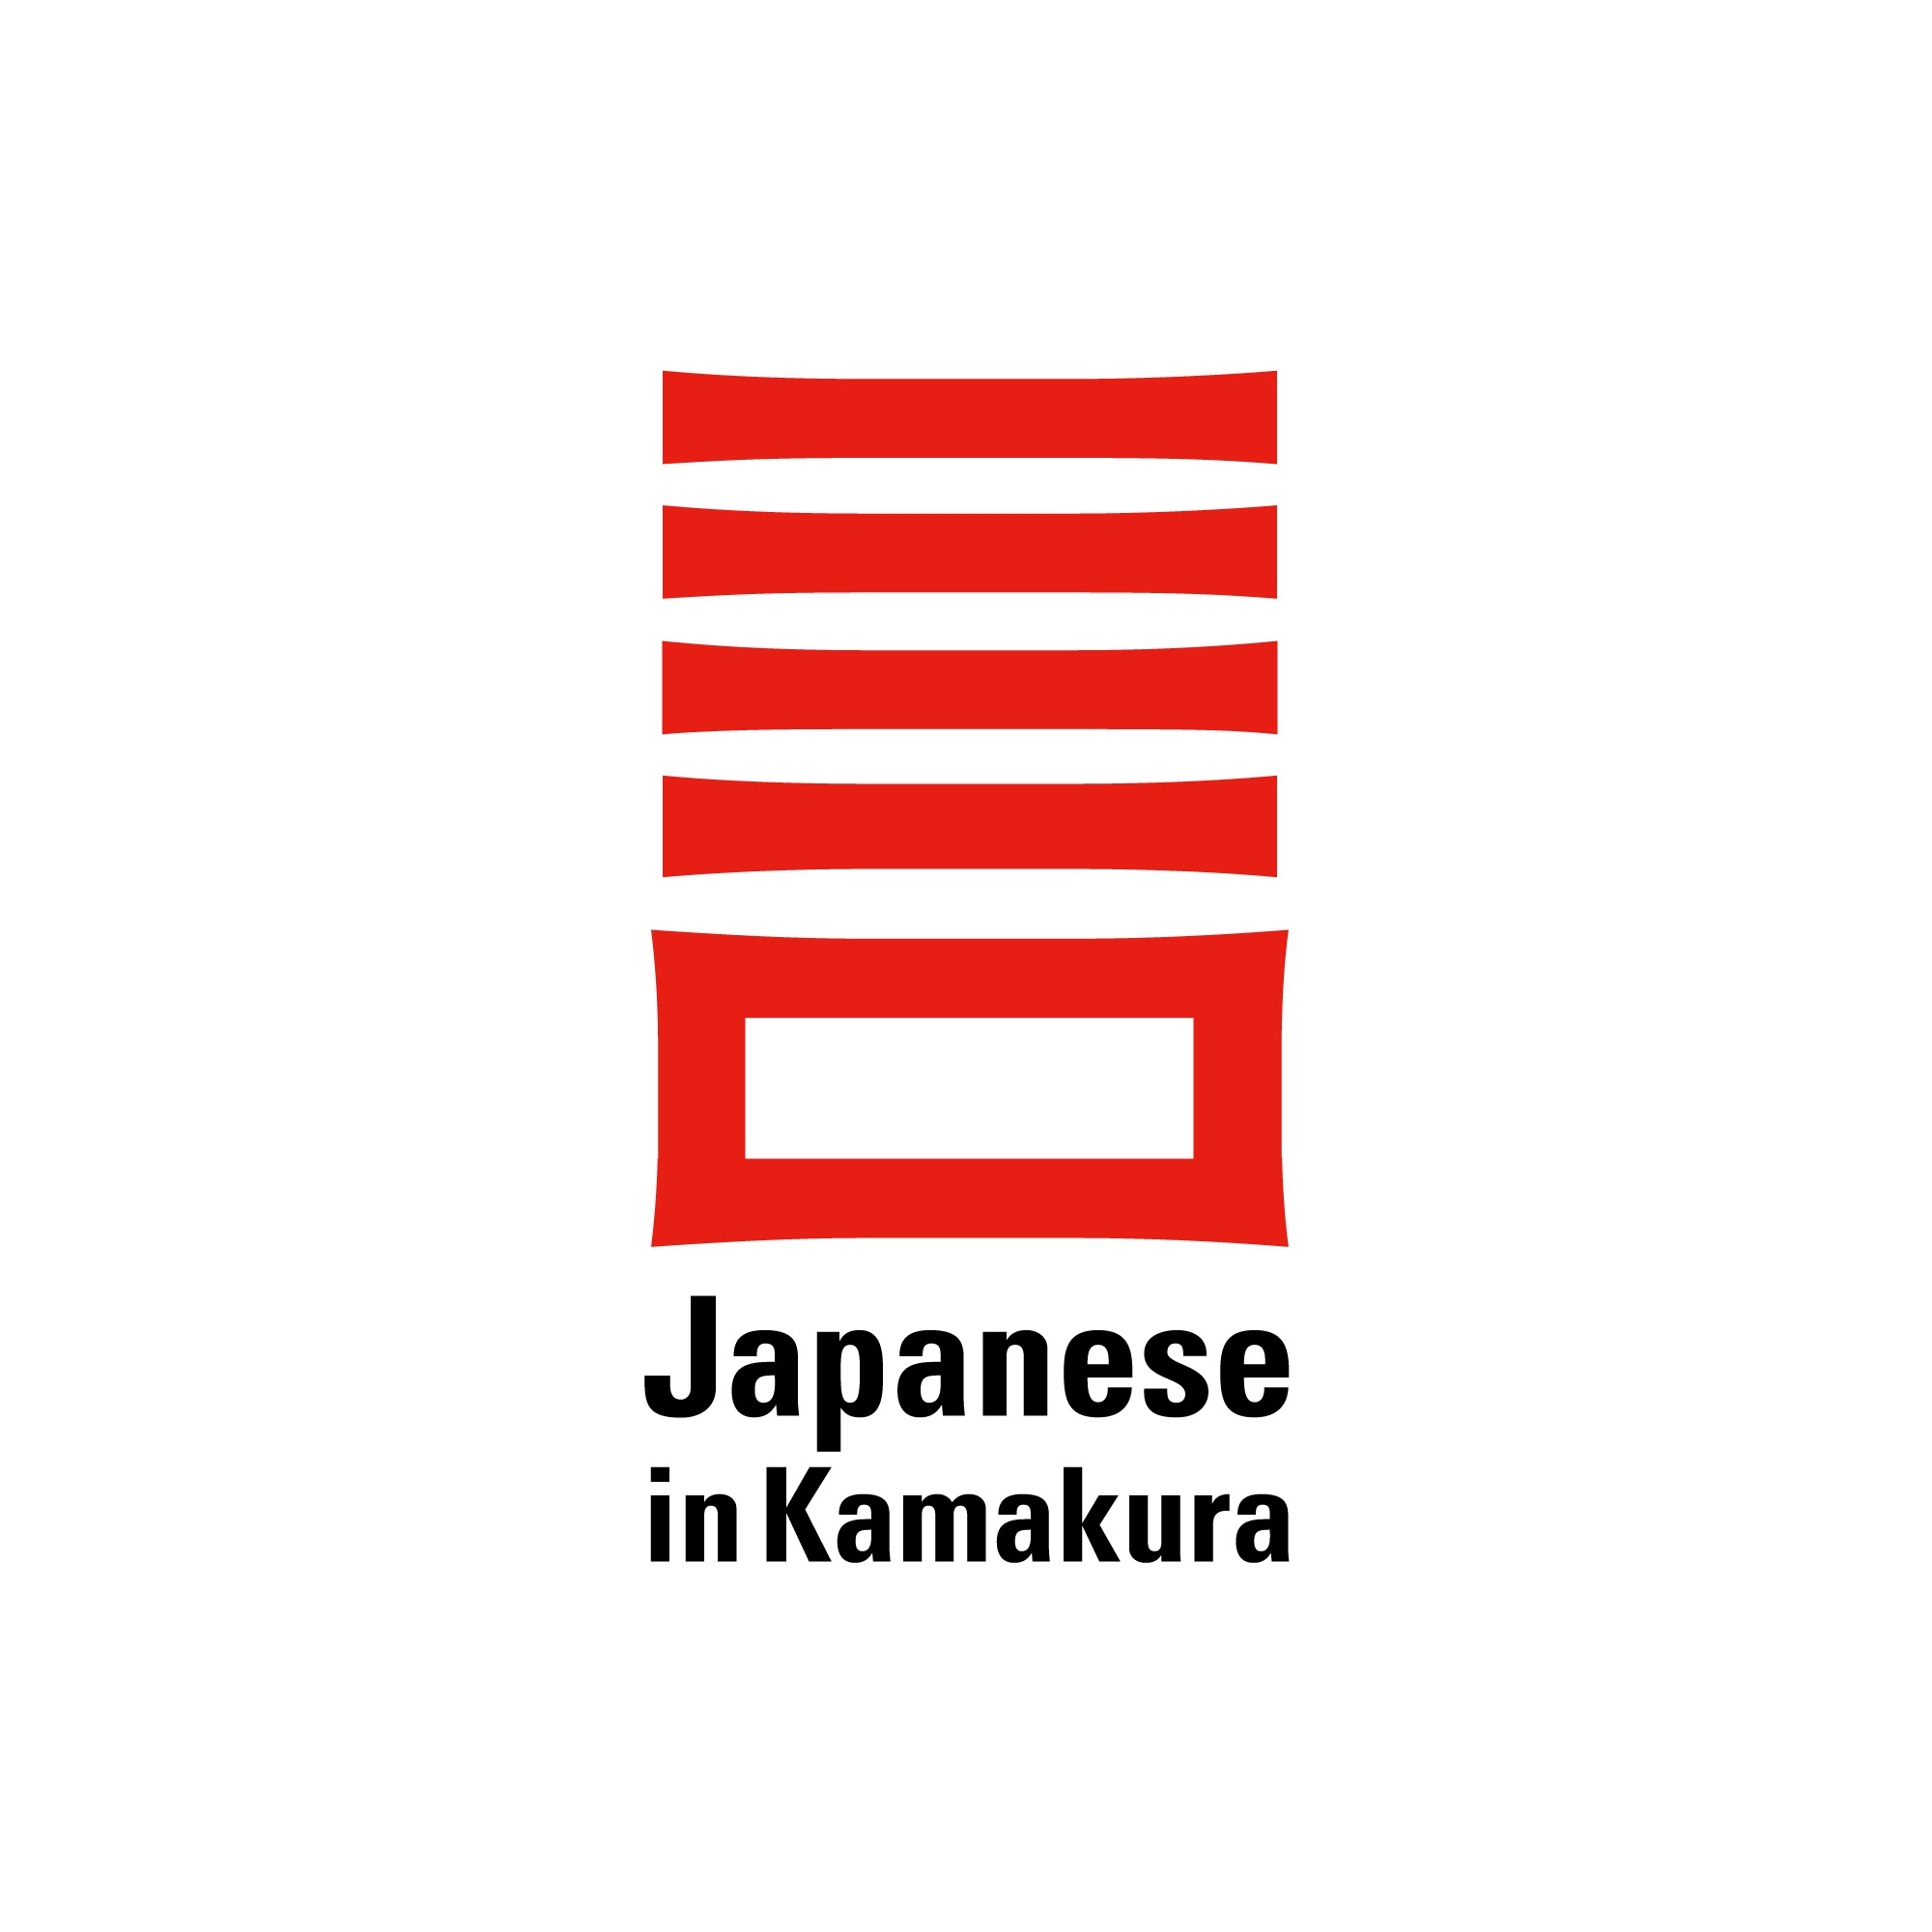 Japanese in Kamakura｜ロゴシンボル ブランドデザイン｜神奈川県鎌倉市 横浜市